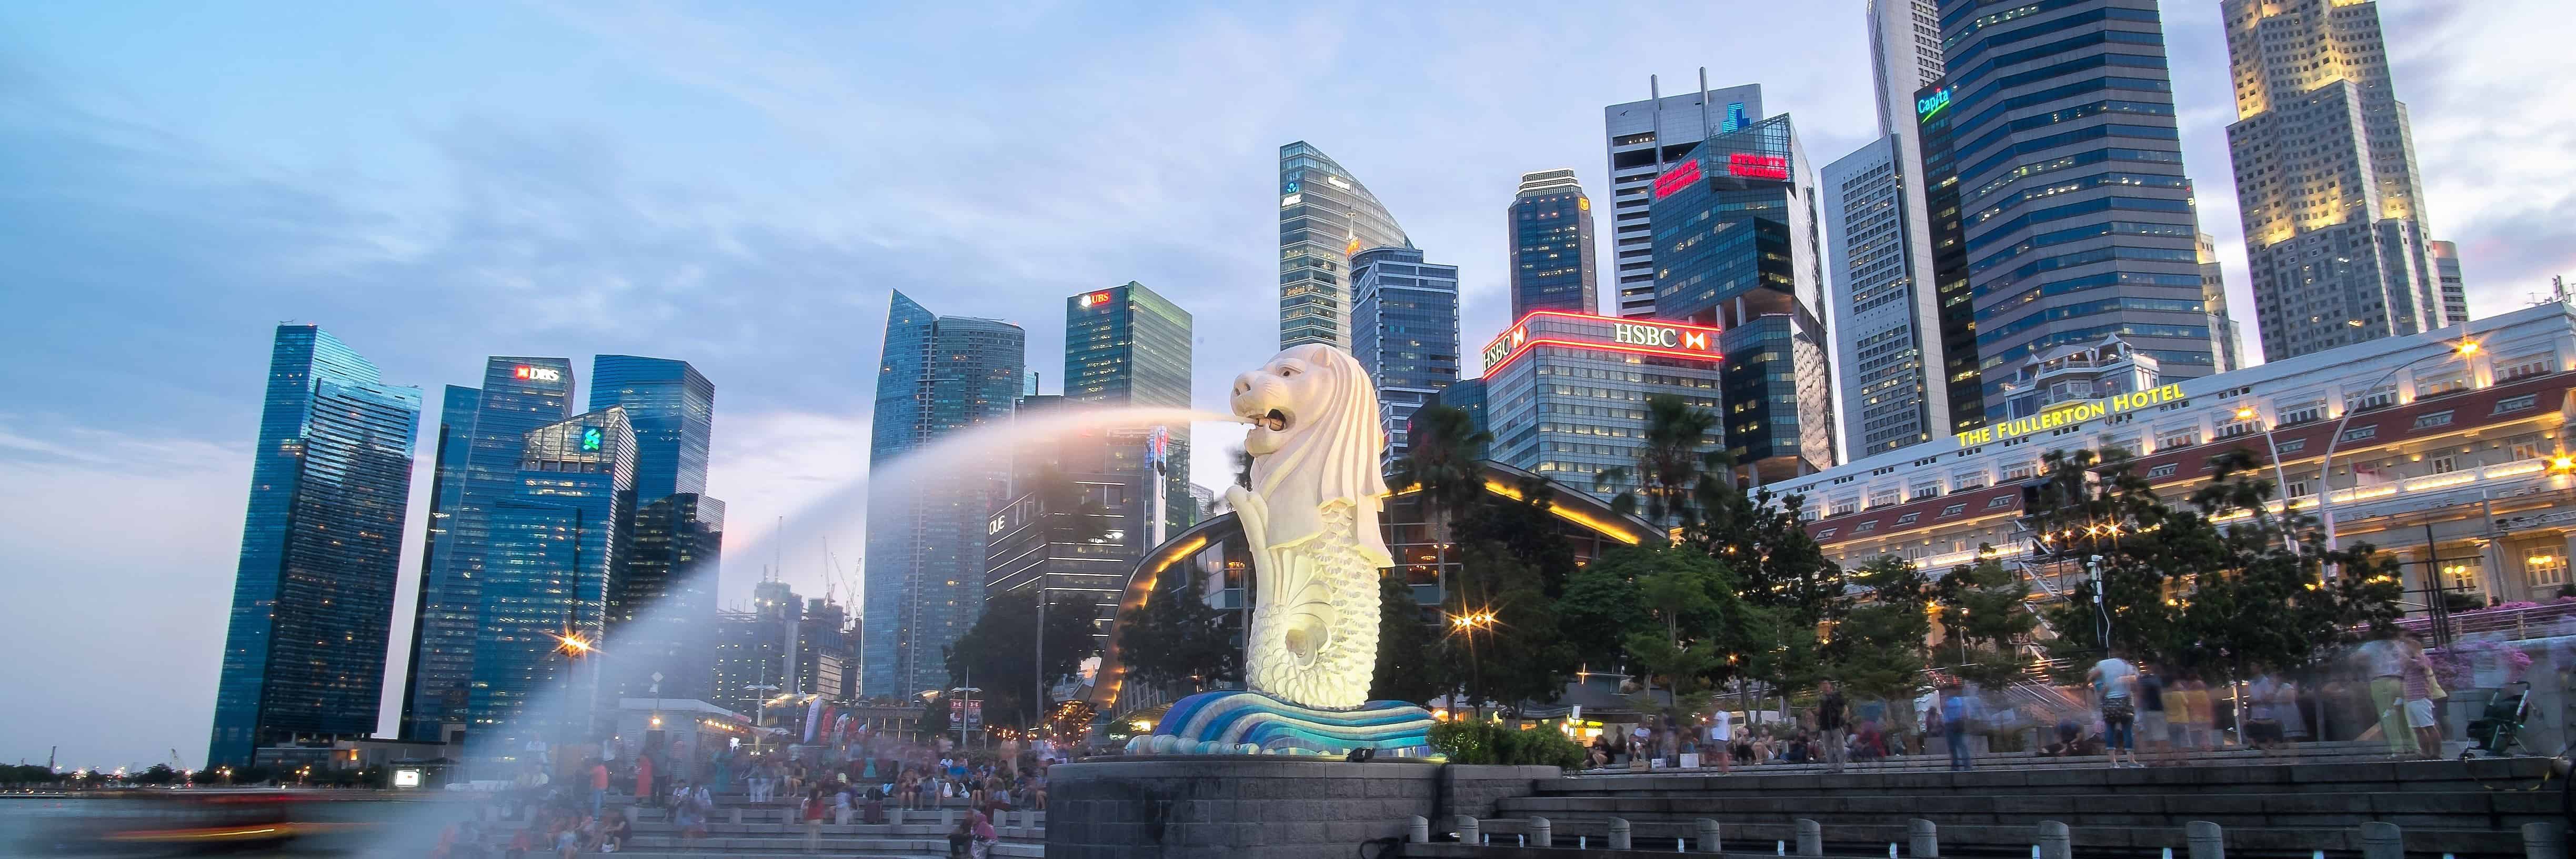 Singapore lion island nation